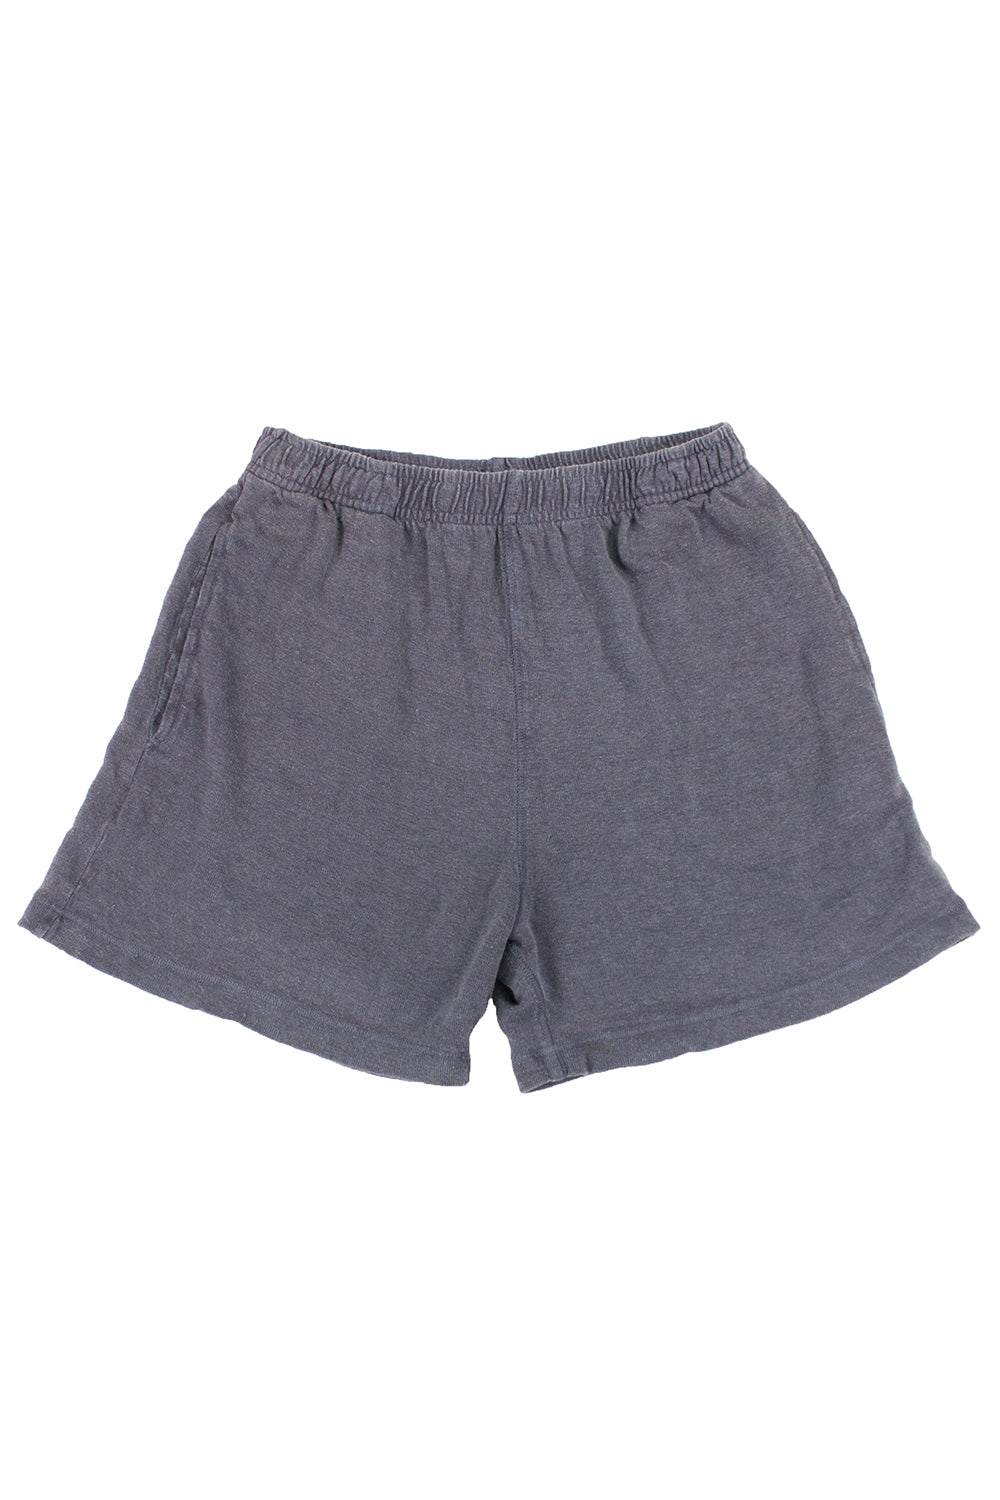 Kona 100% Hemp Short | Jungmaven Hemp Clothing & Accessories / Color: Diesel Gray